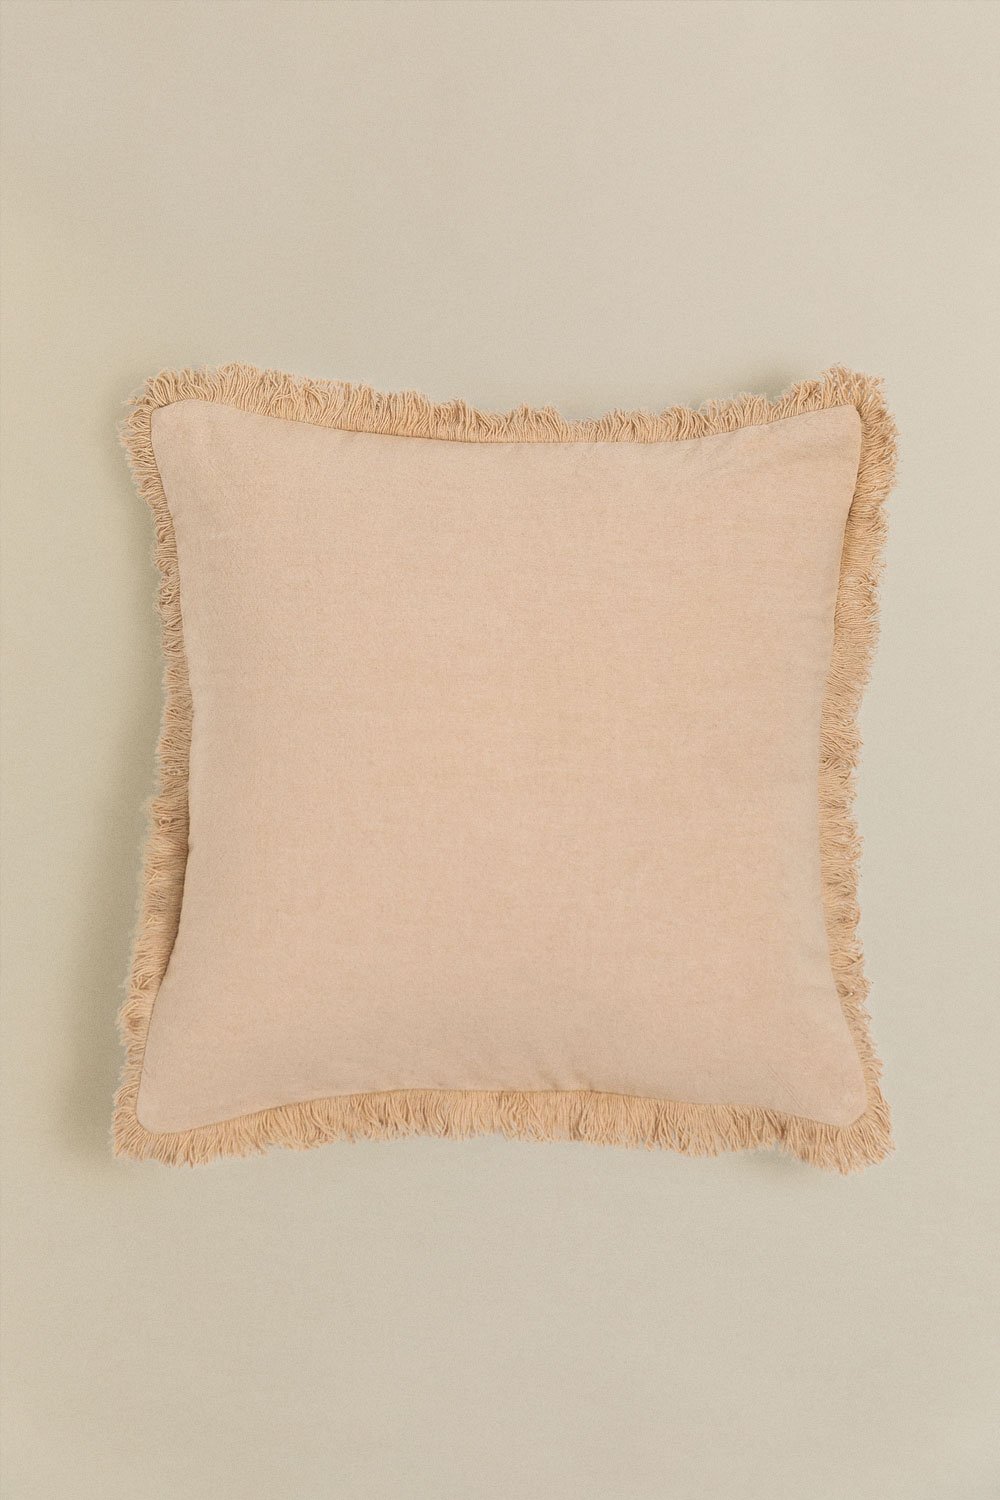 Square Cotton Cushion (40x40 cm) Brigui, gallery image 1